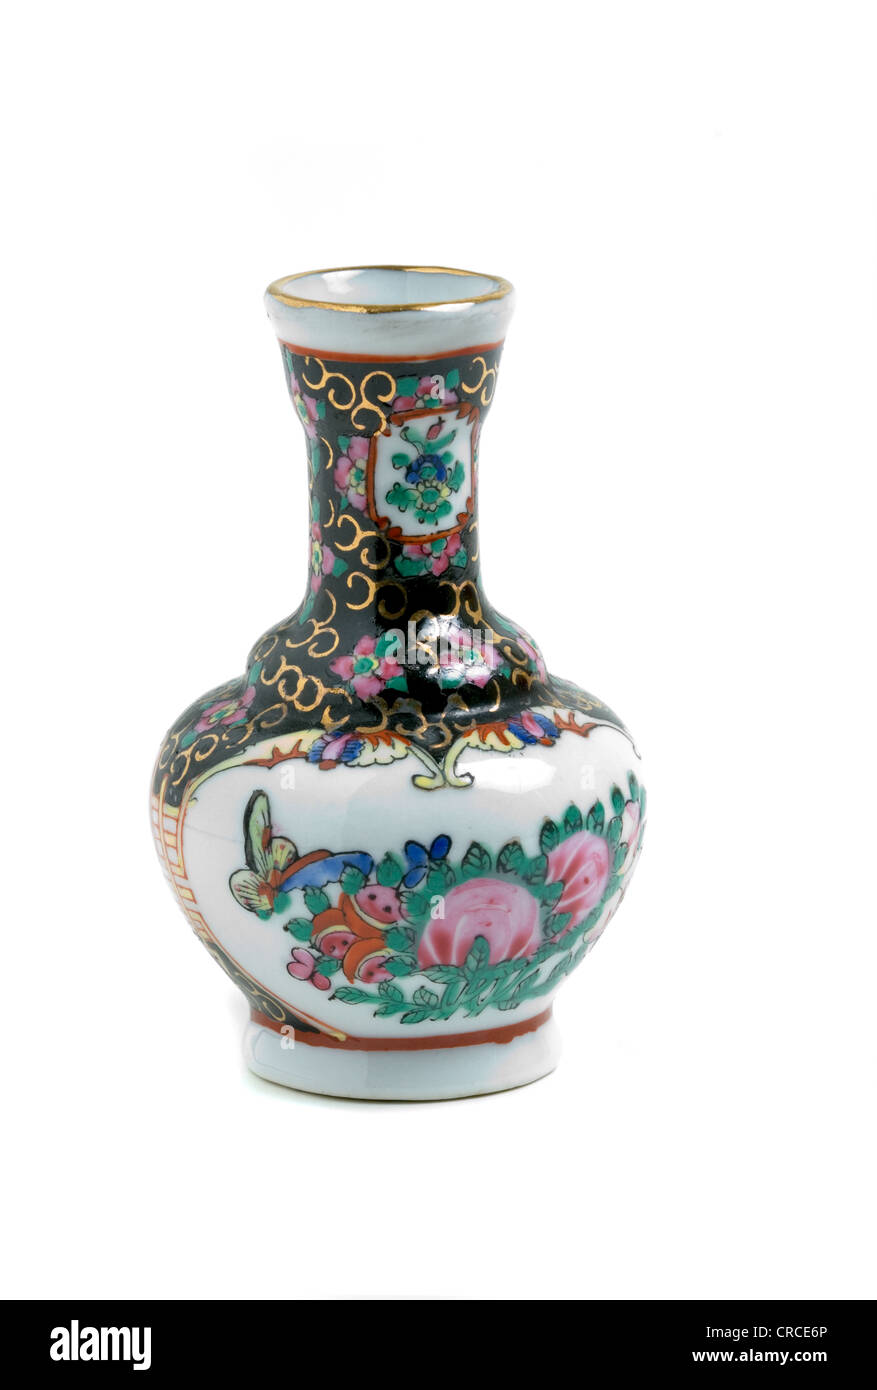 Small China Vase on white background in studio. Stock Photo